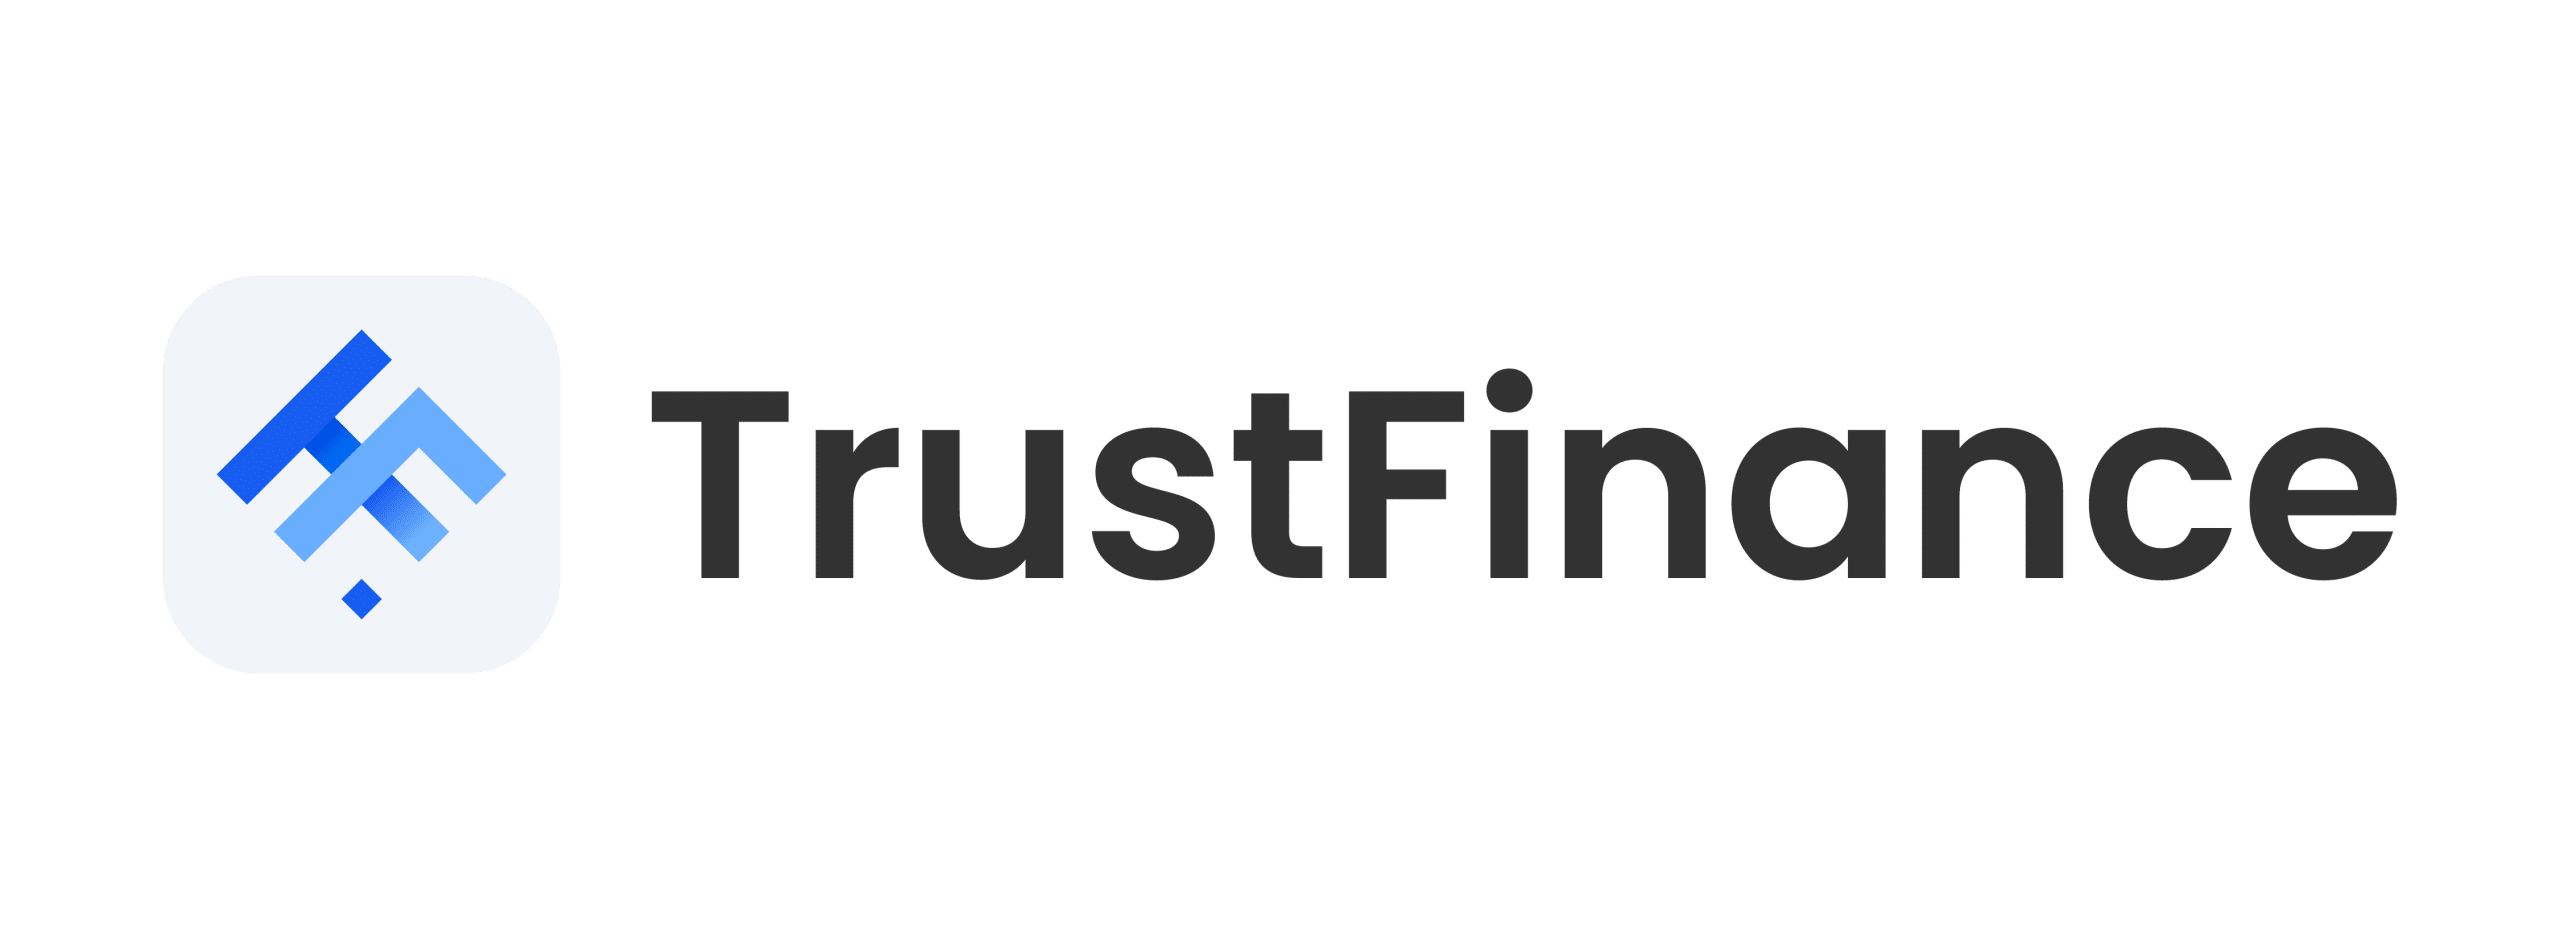 Trustfinance